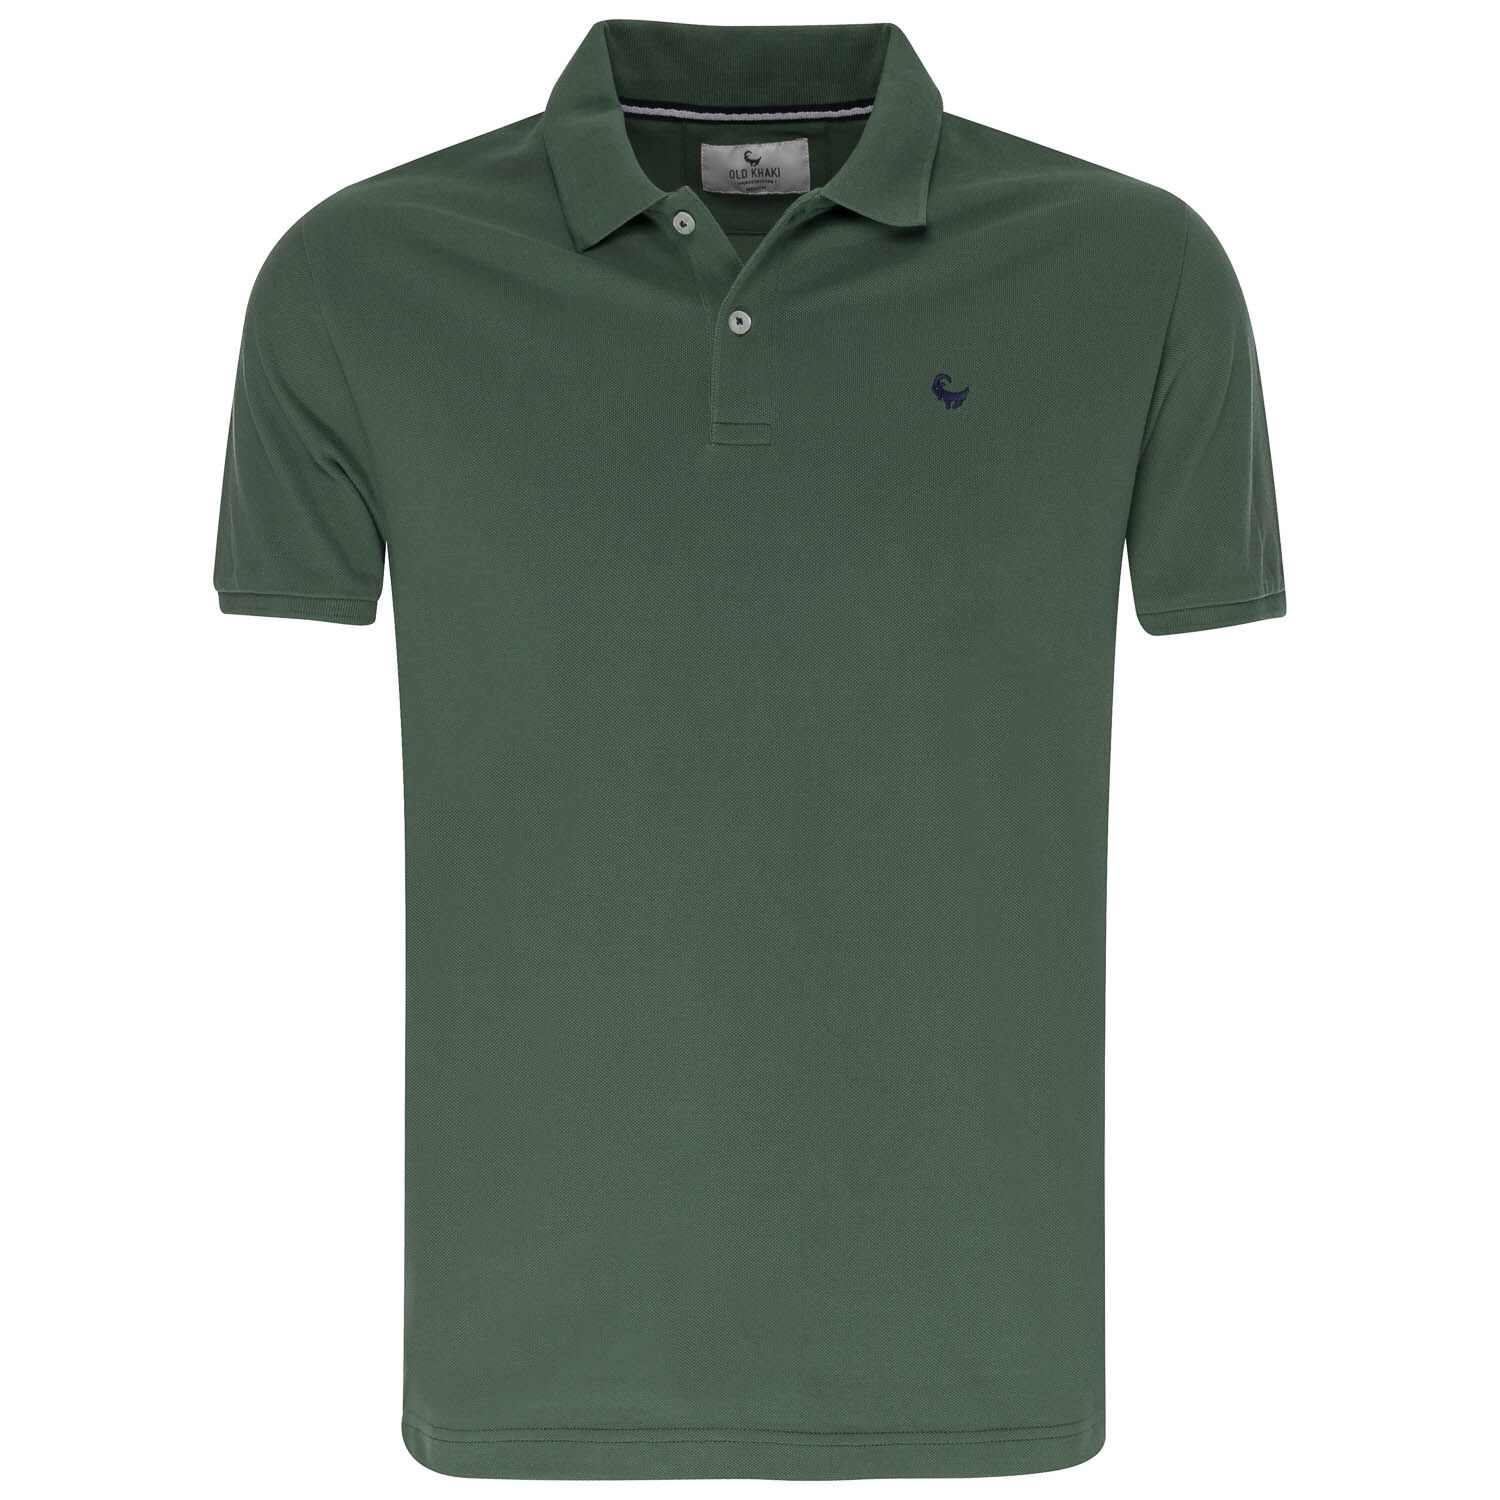 timberland golf shirt price